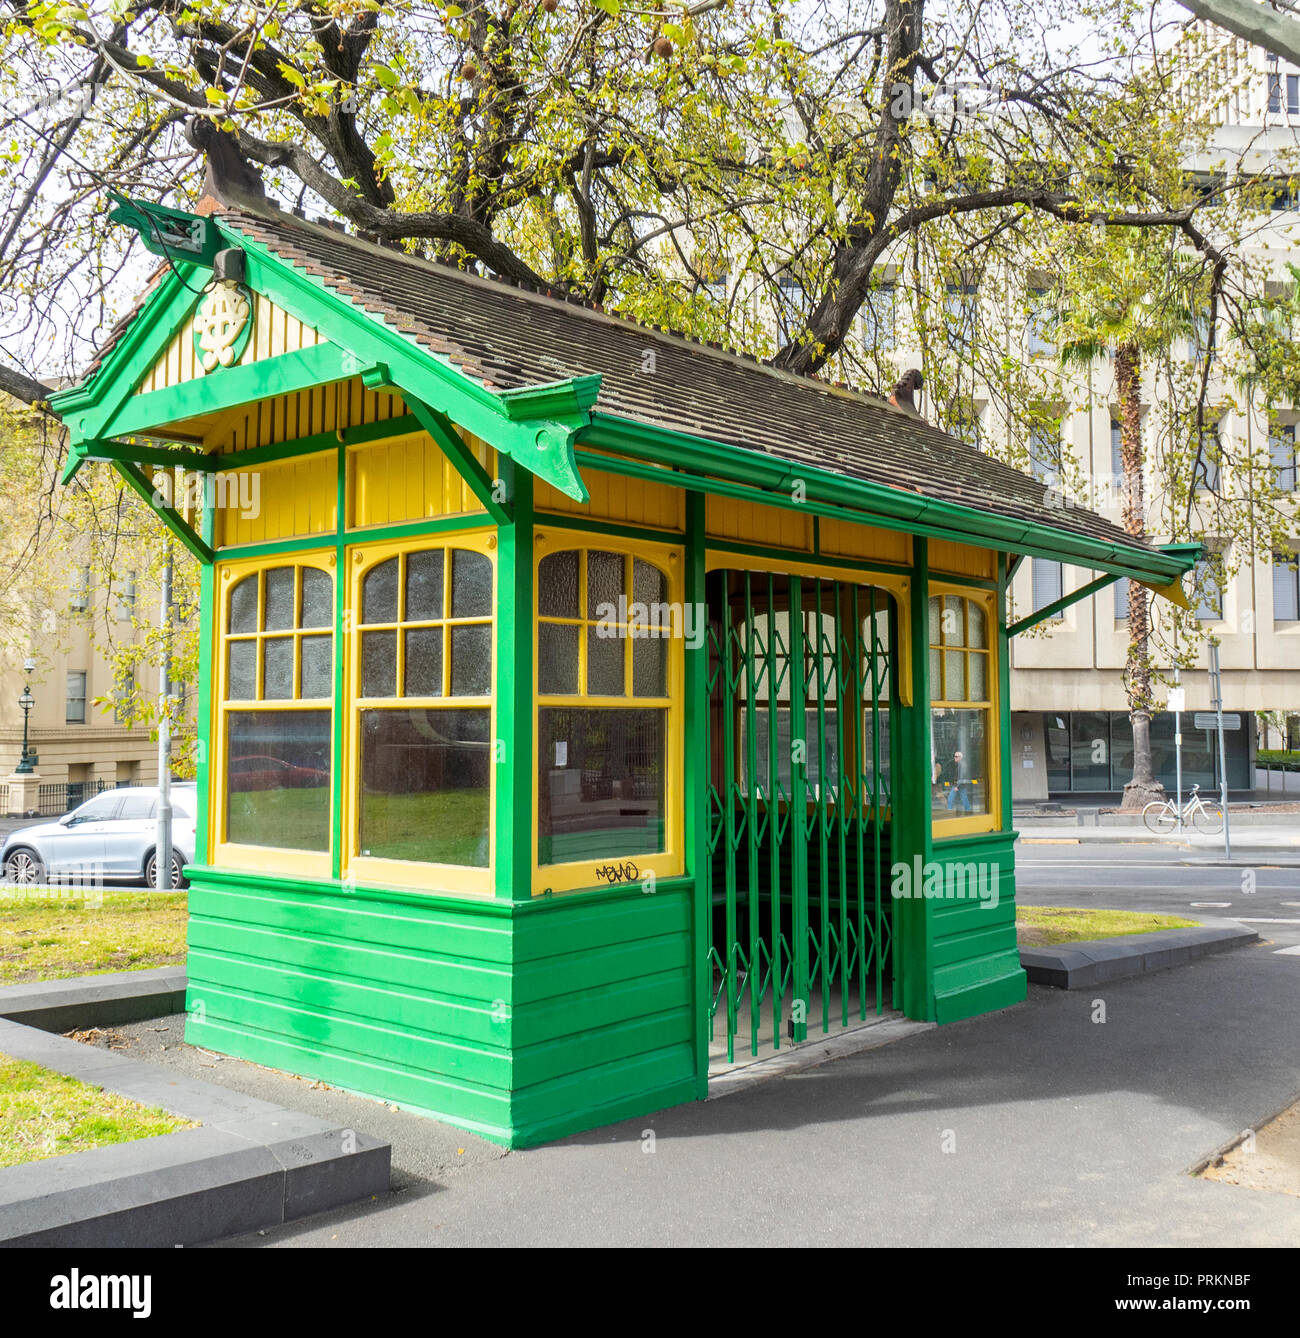 A restored bus and tram shelter in Melbourne, Victoria Australia. Stock Photo